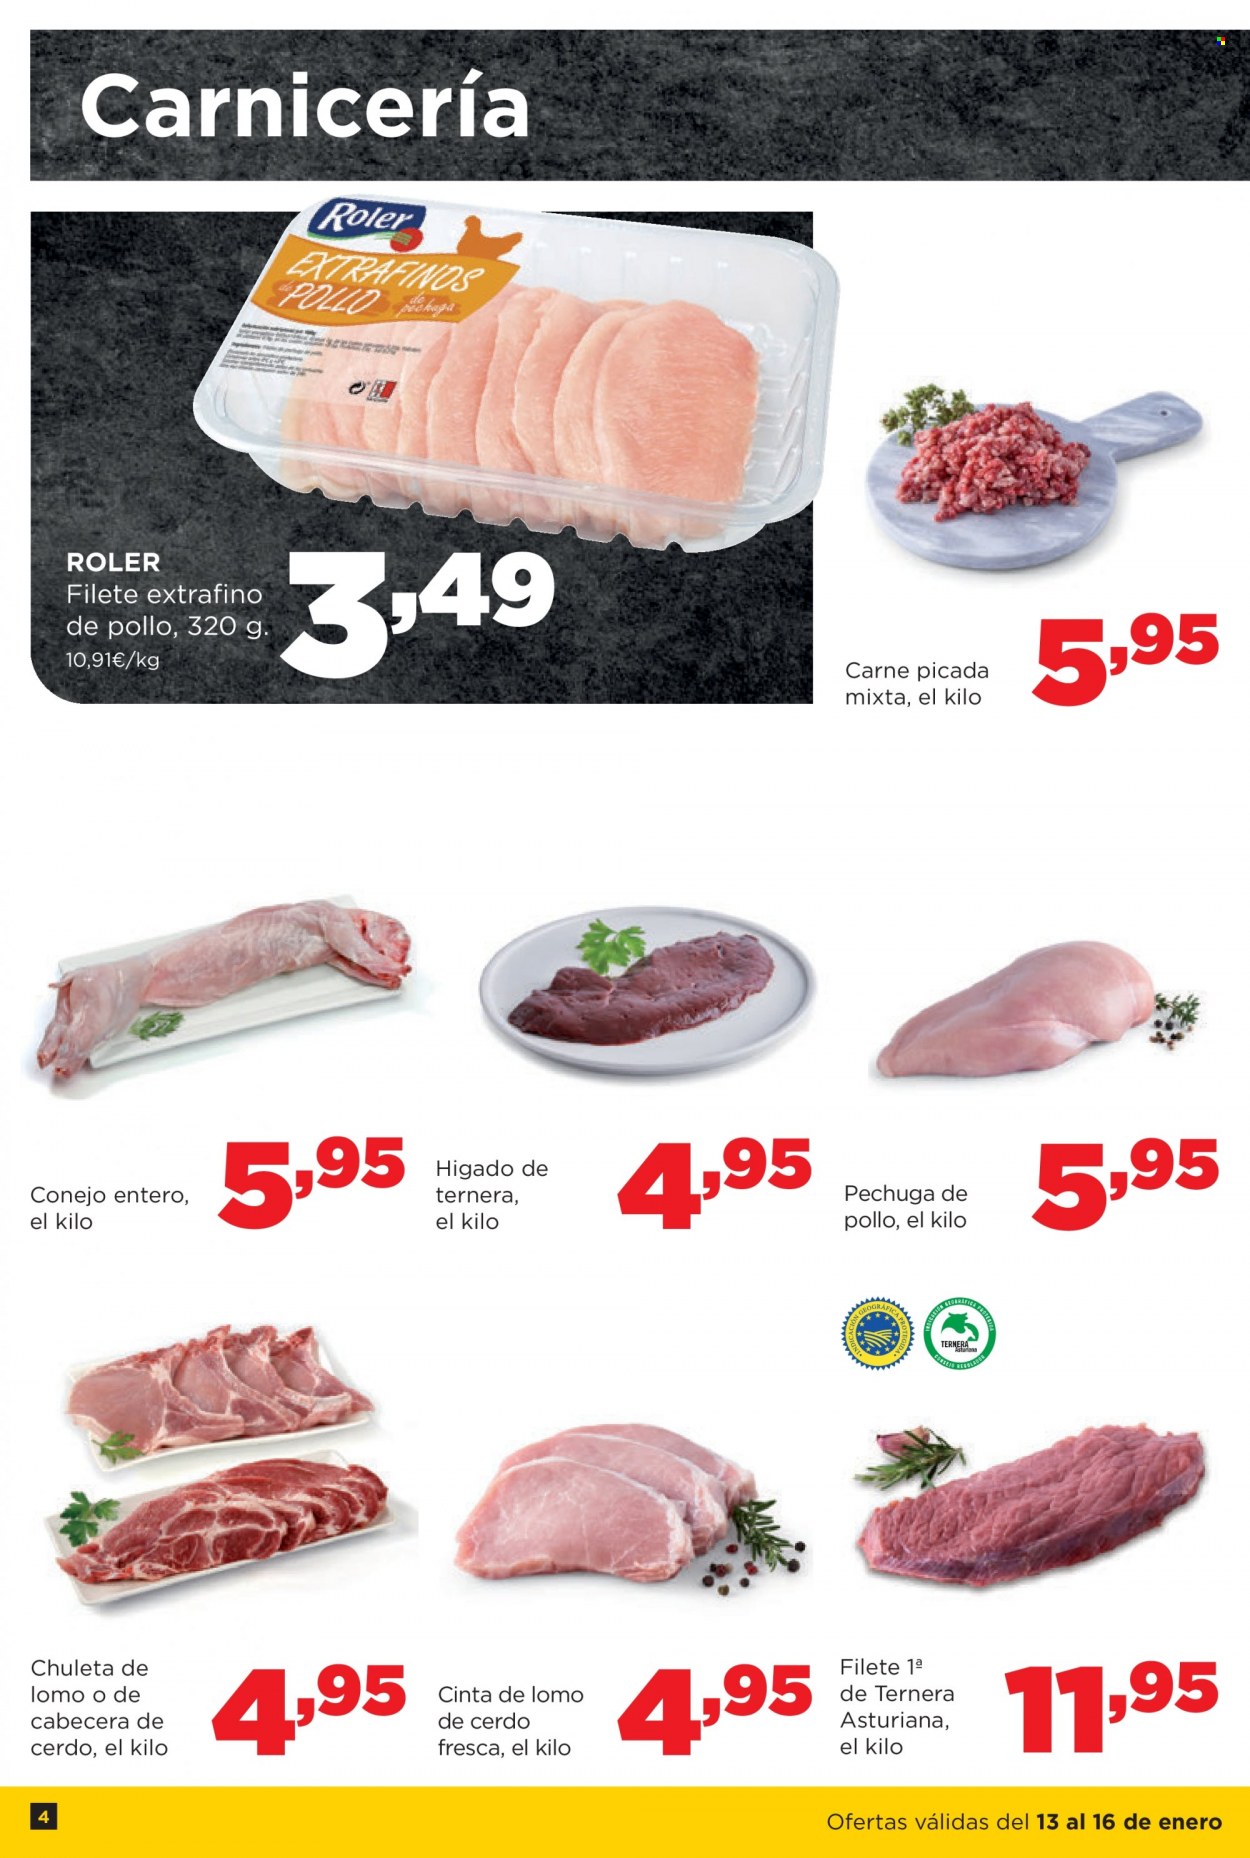 thumbnail - Folleto actual Alimerka - 13/01/22 - 26/01/22 - Ventas - chuleta, cinta de lomo, pollo, carne de ternera, carne picada, conejo. Página 4.